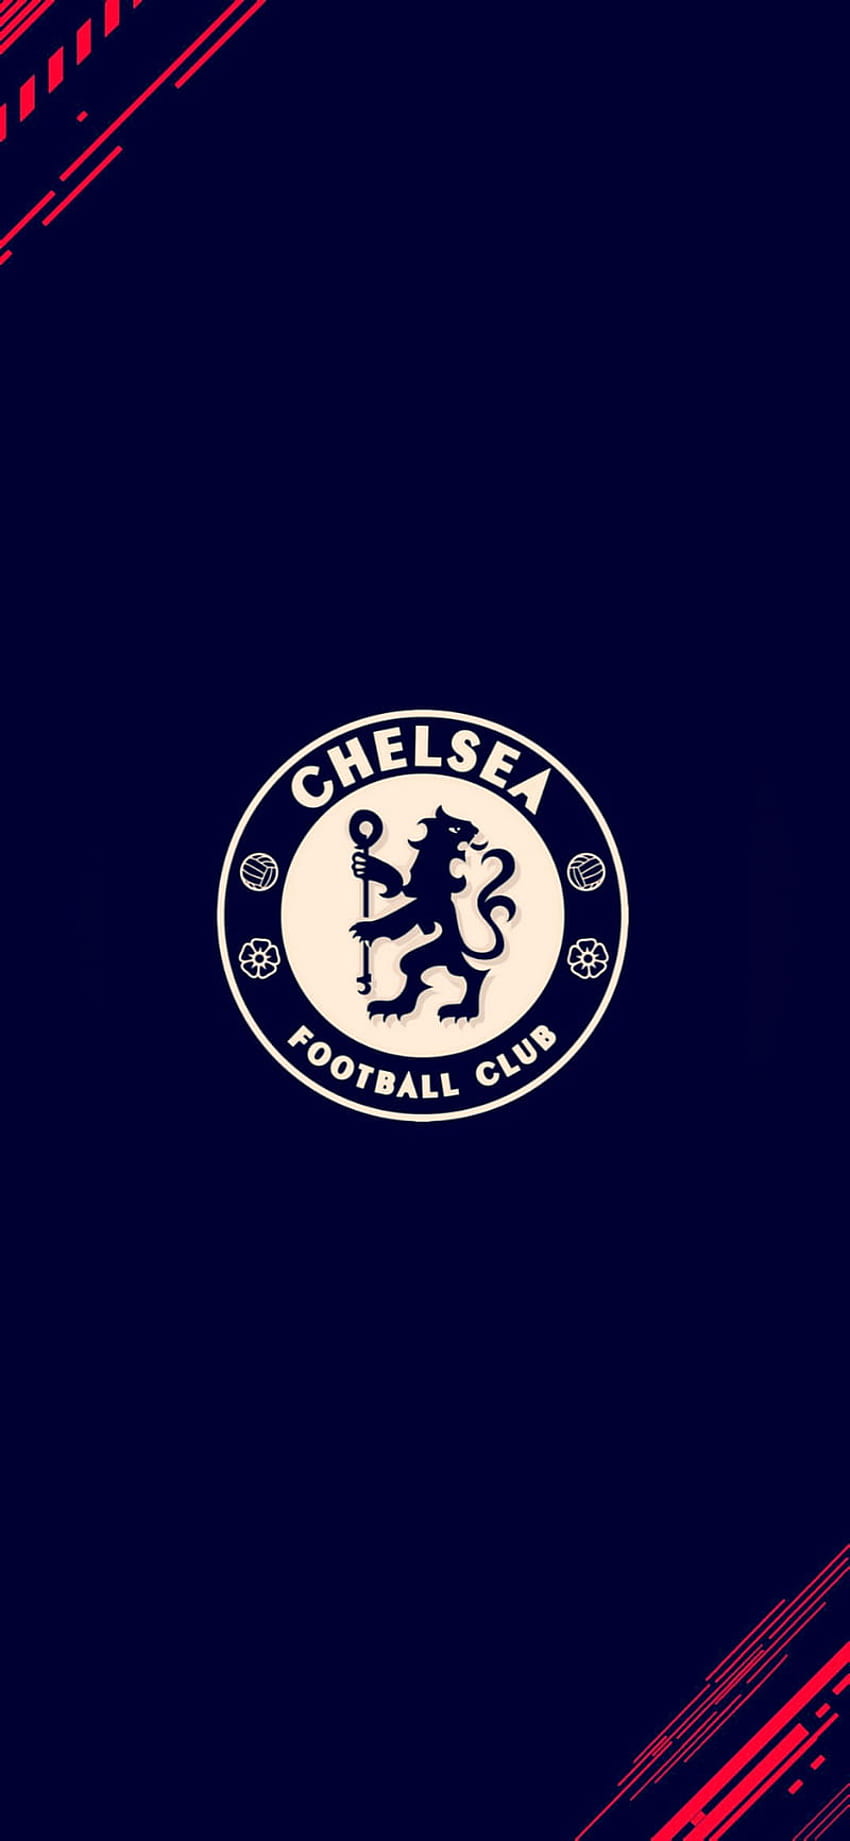 Chelsea FC, che, biru elektrik, sepak bola, simbol, biru, Inggris, logo, sepak bola, olahraga, blues wallpaper ponsel HD